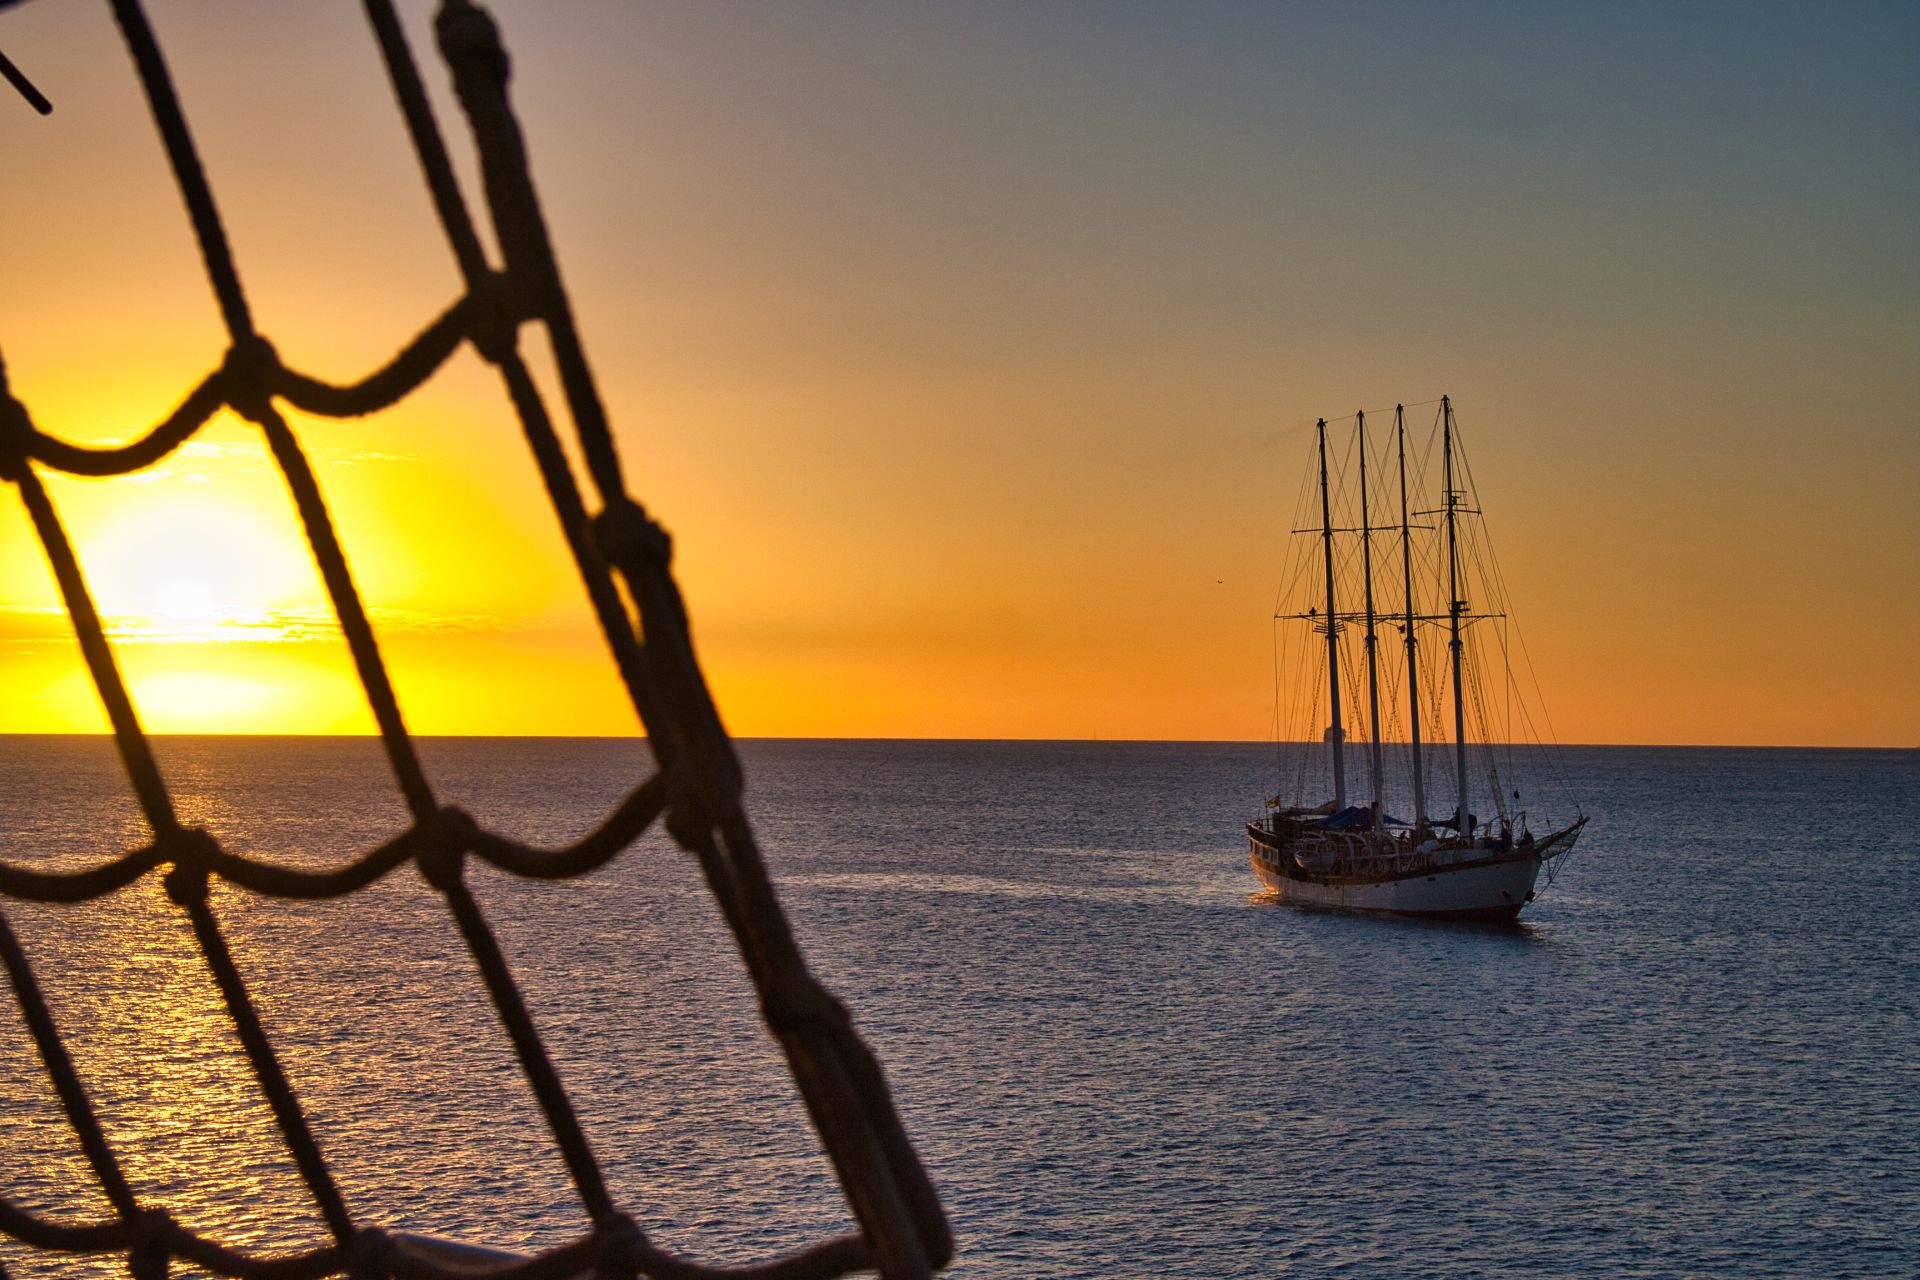 Net Rope Ladder with Three-Master Sailing Ship at Sunset